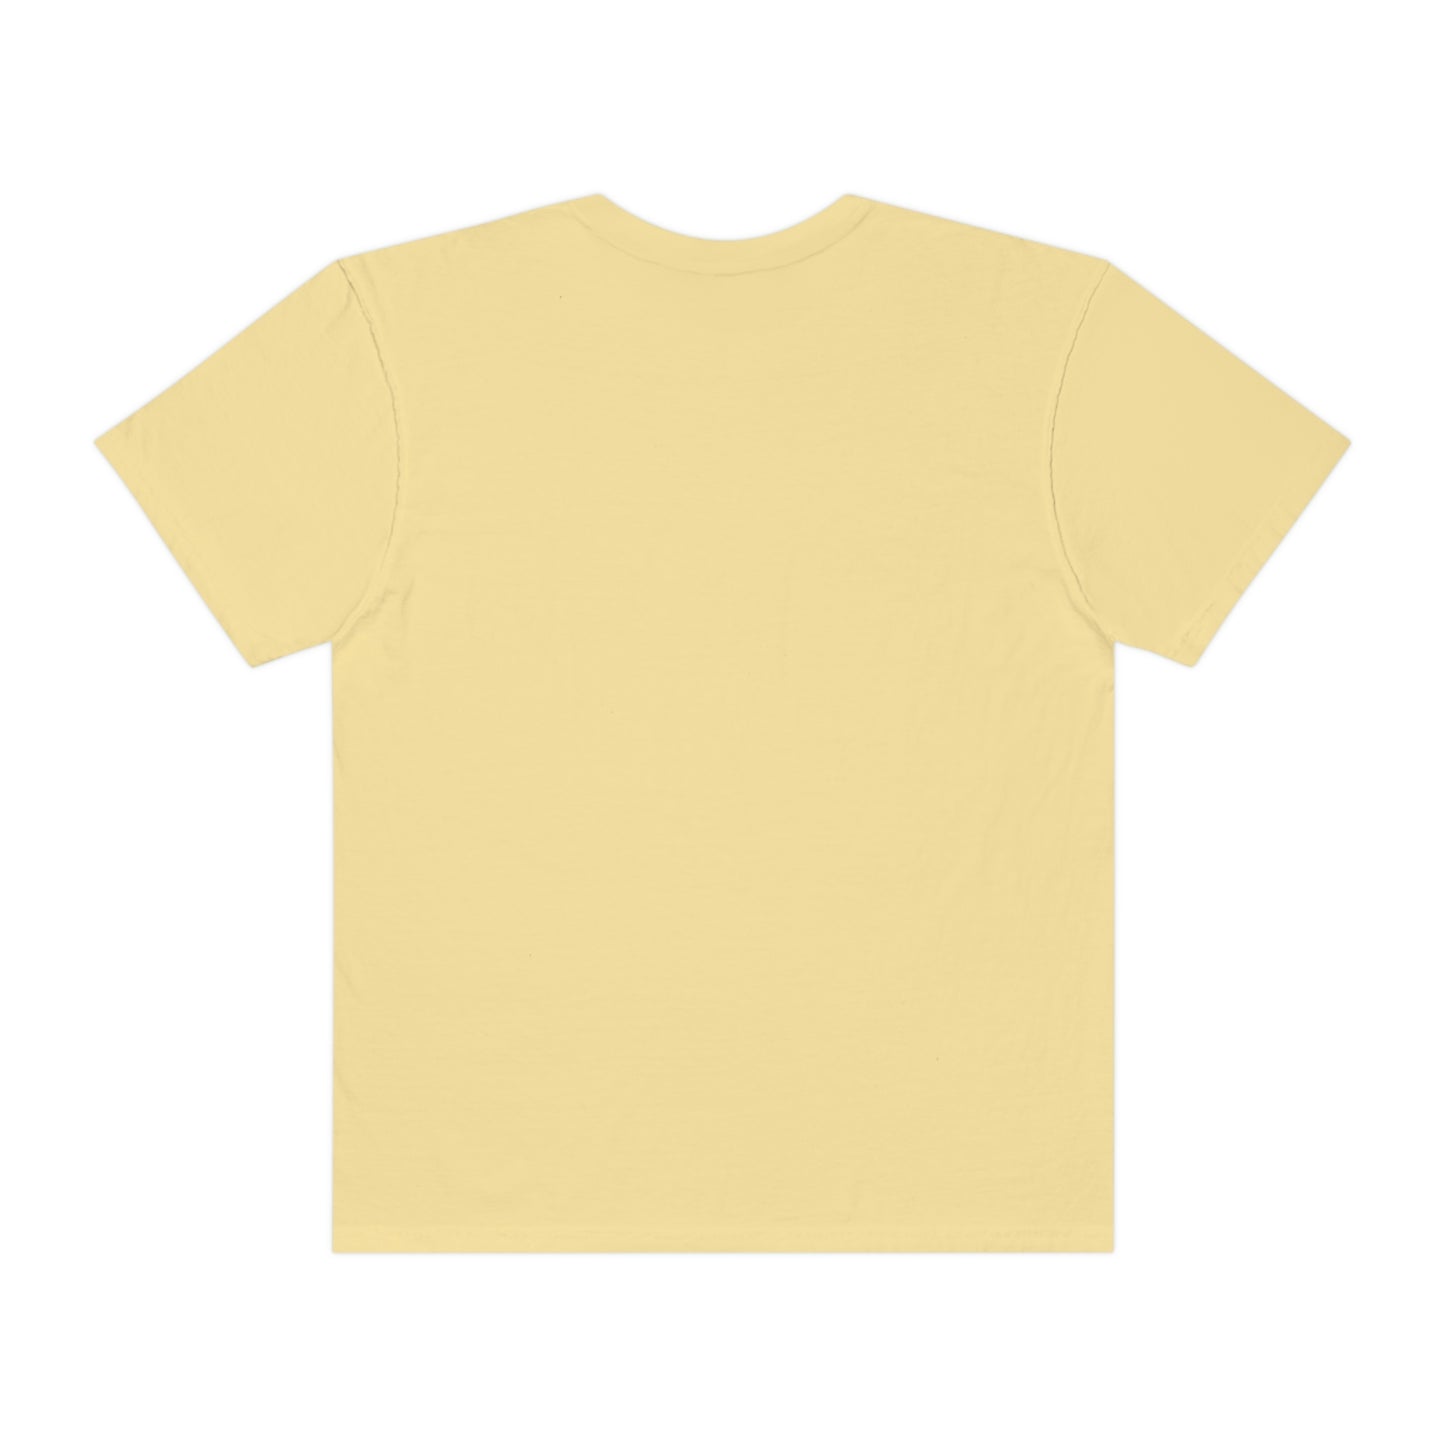 Jazz Cat v1 - Unisex Garment-Dyed T-shirt